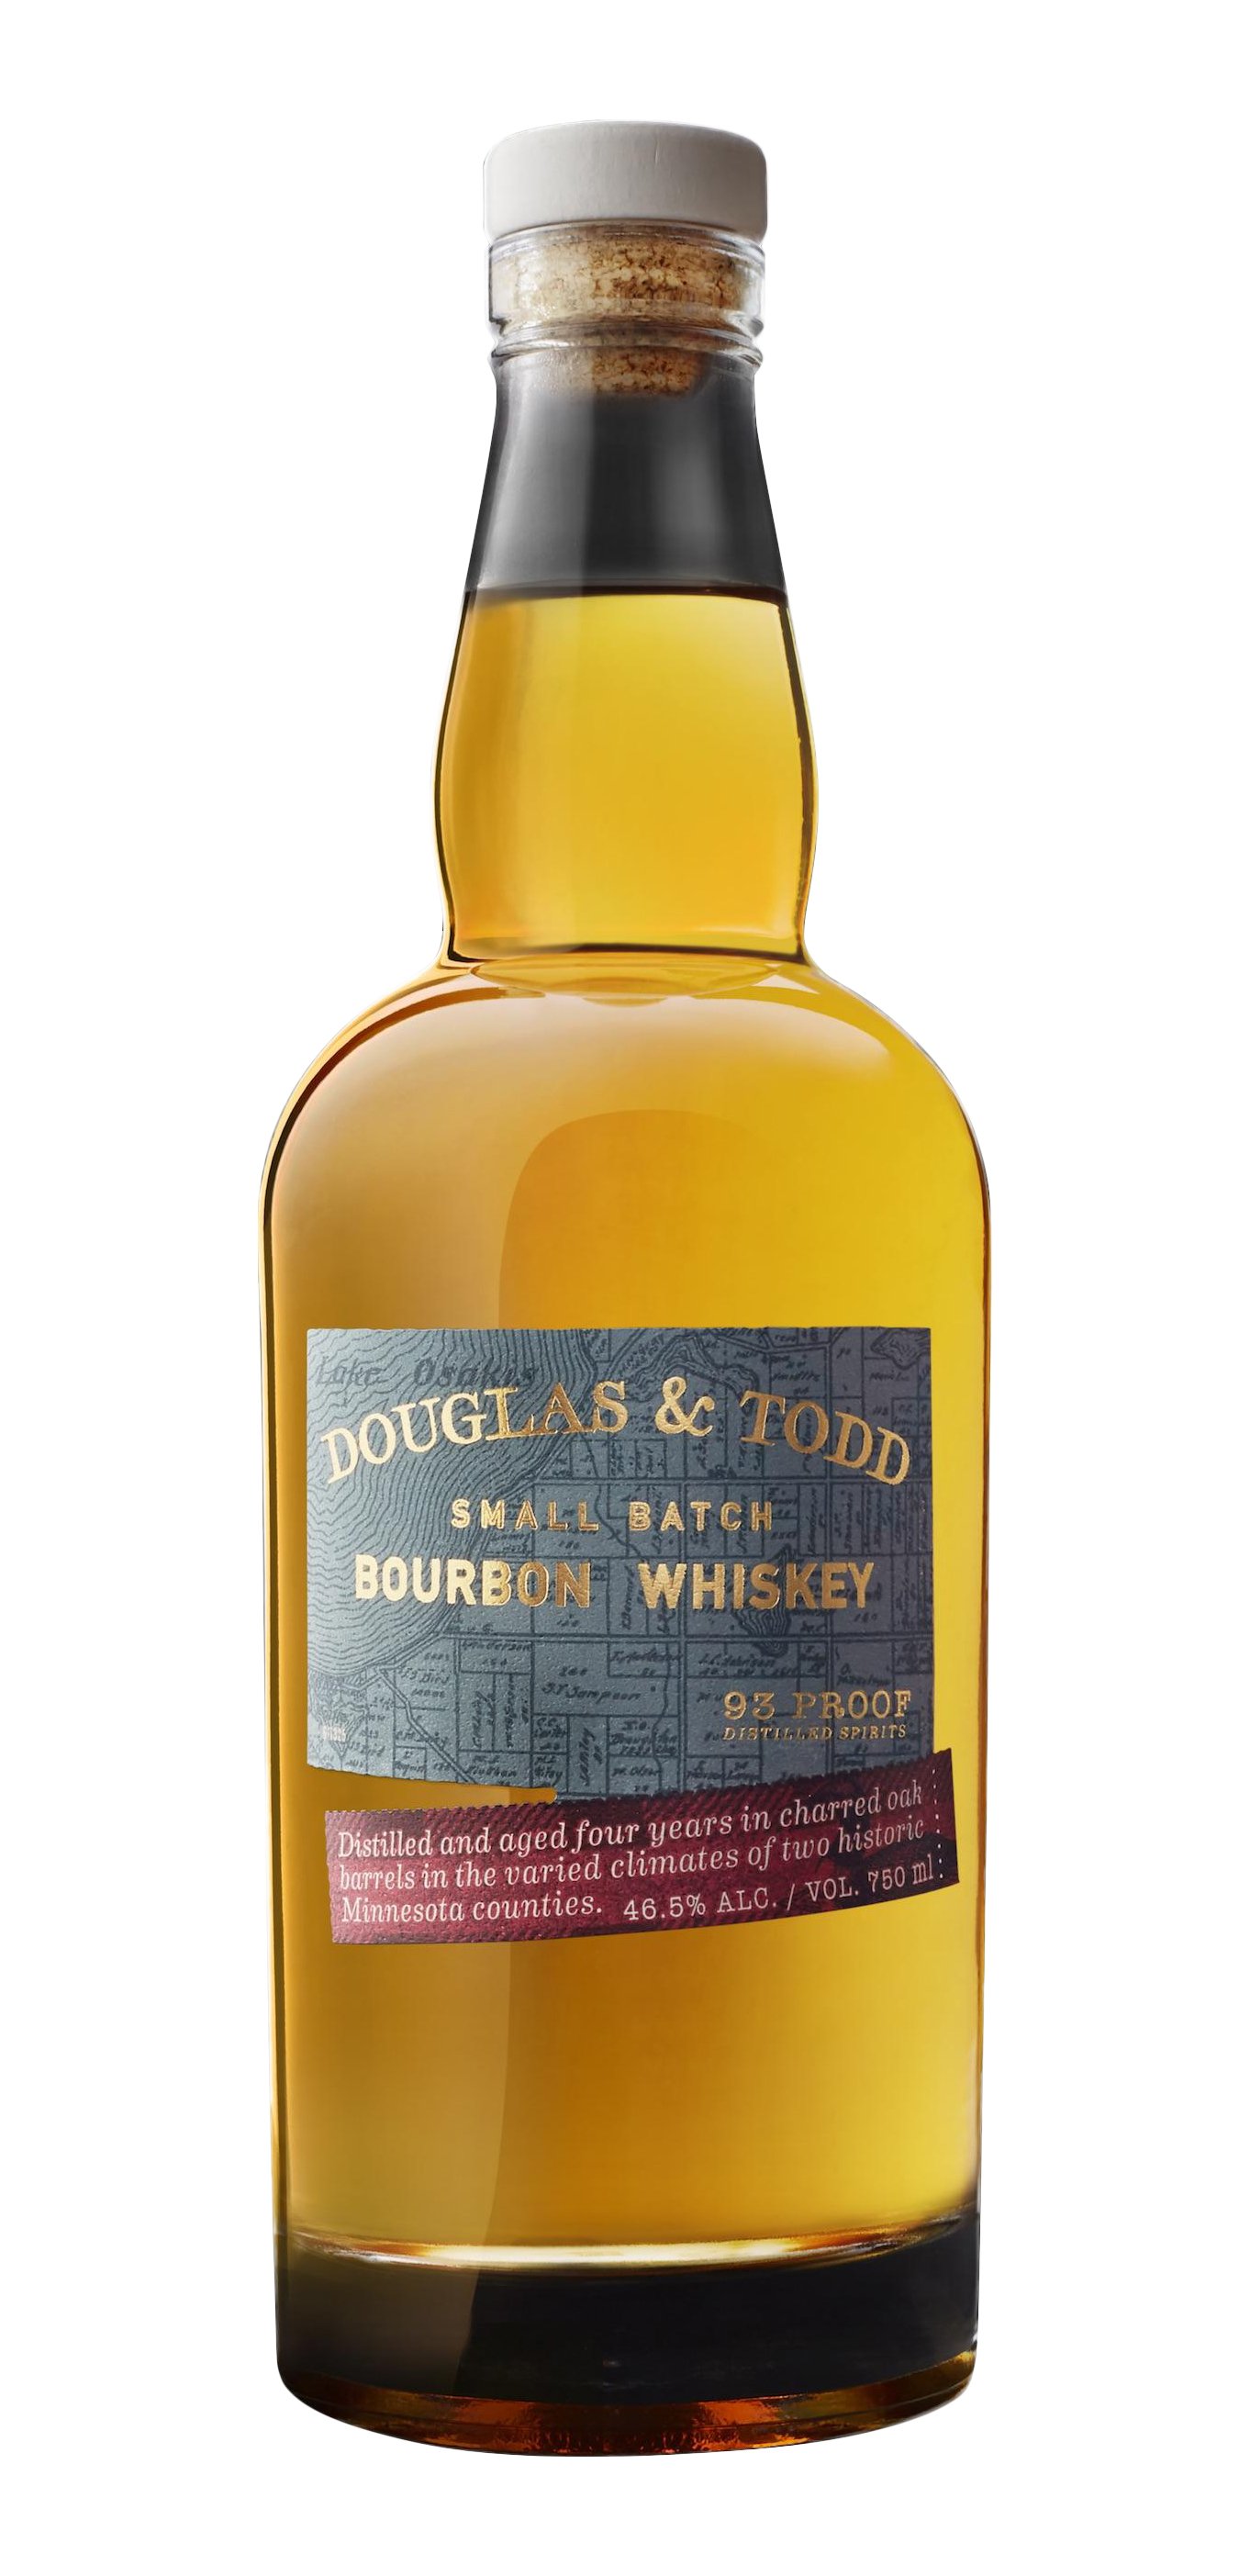 Douglas and Todd Small Batch Bourbon Whiskey